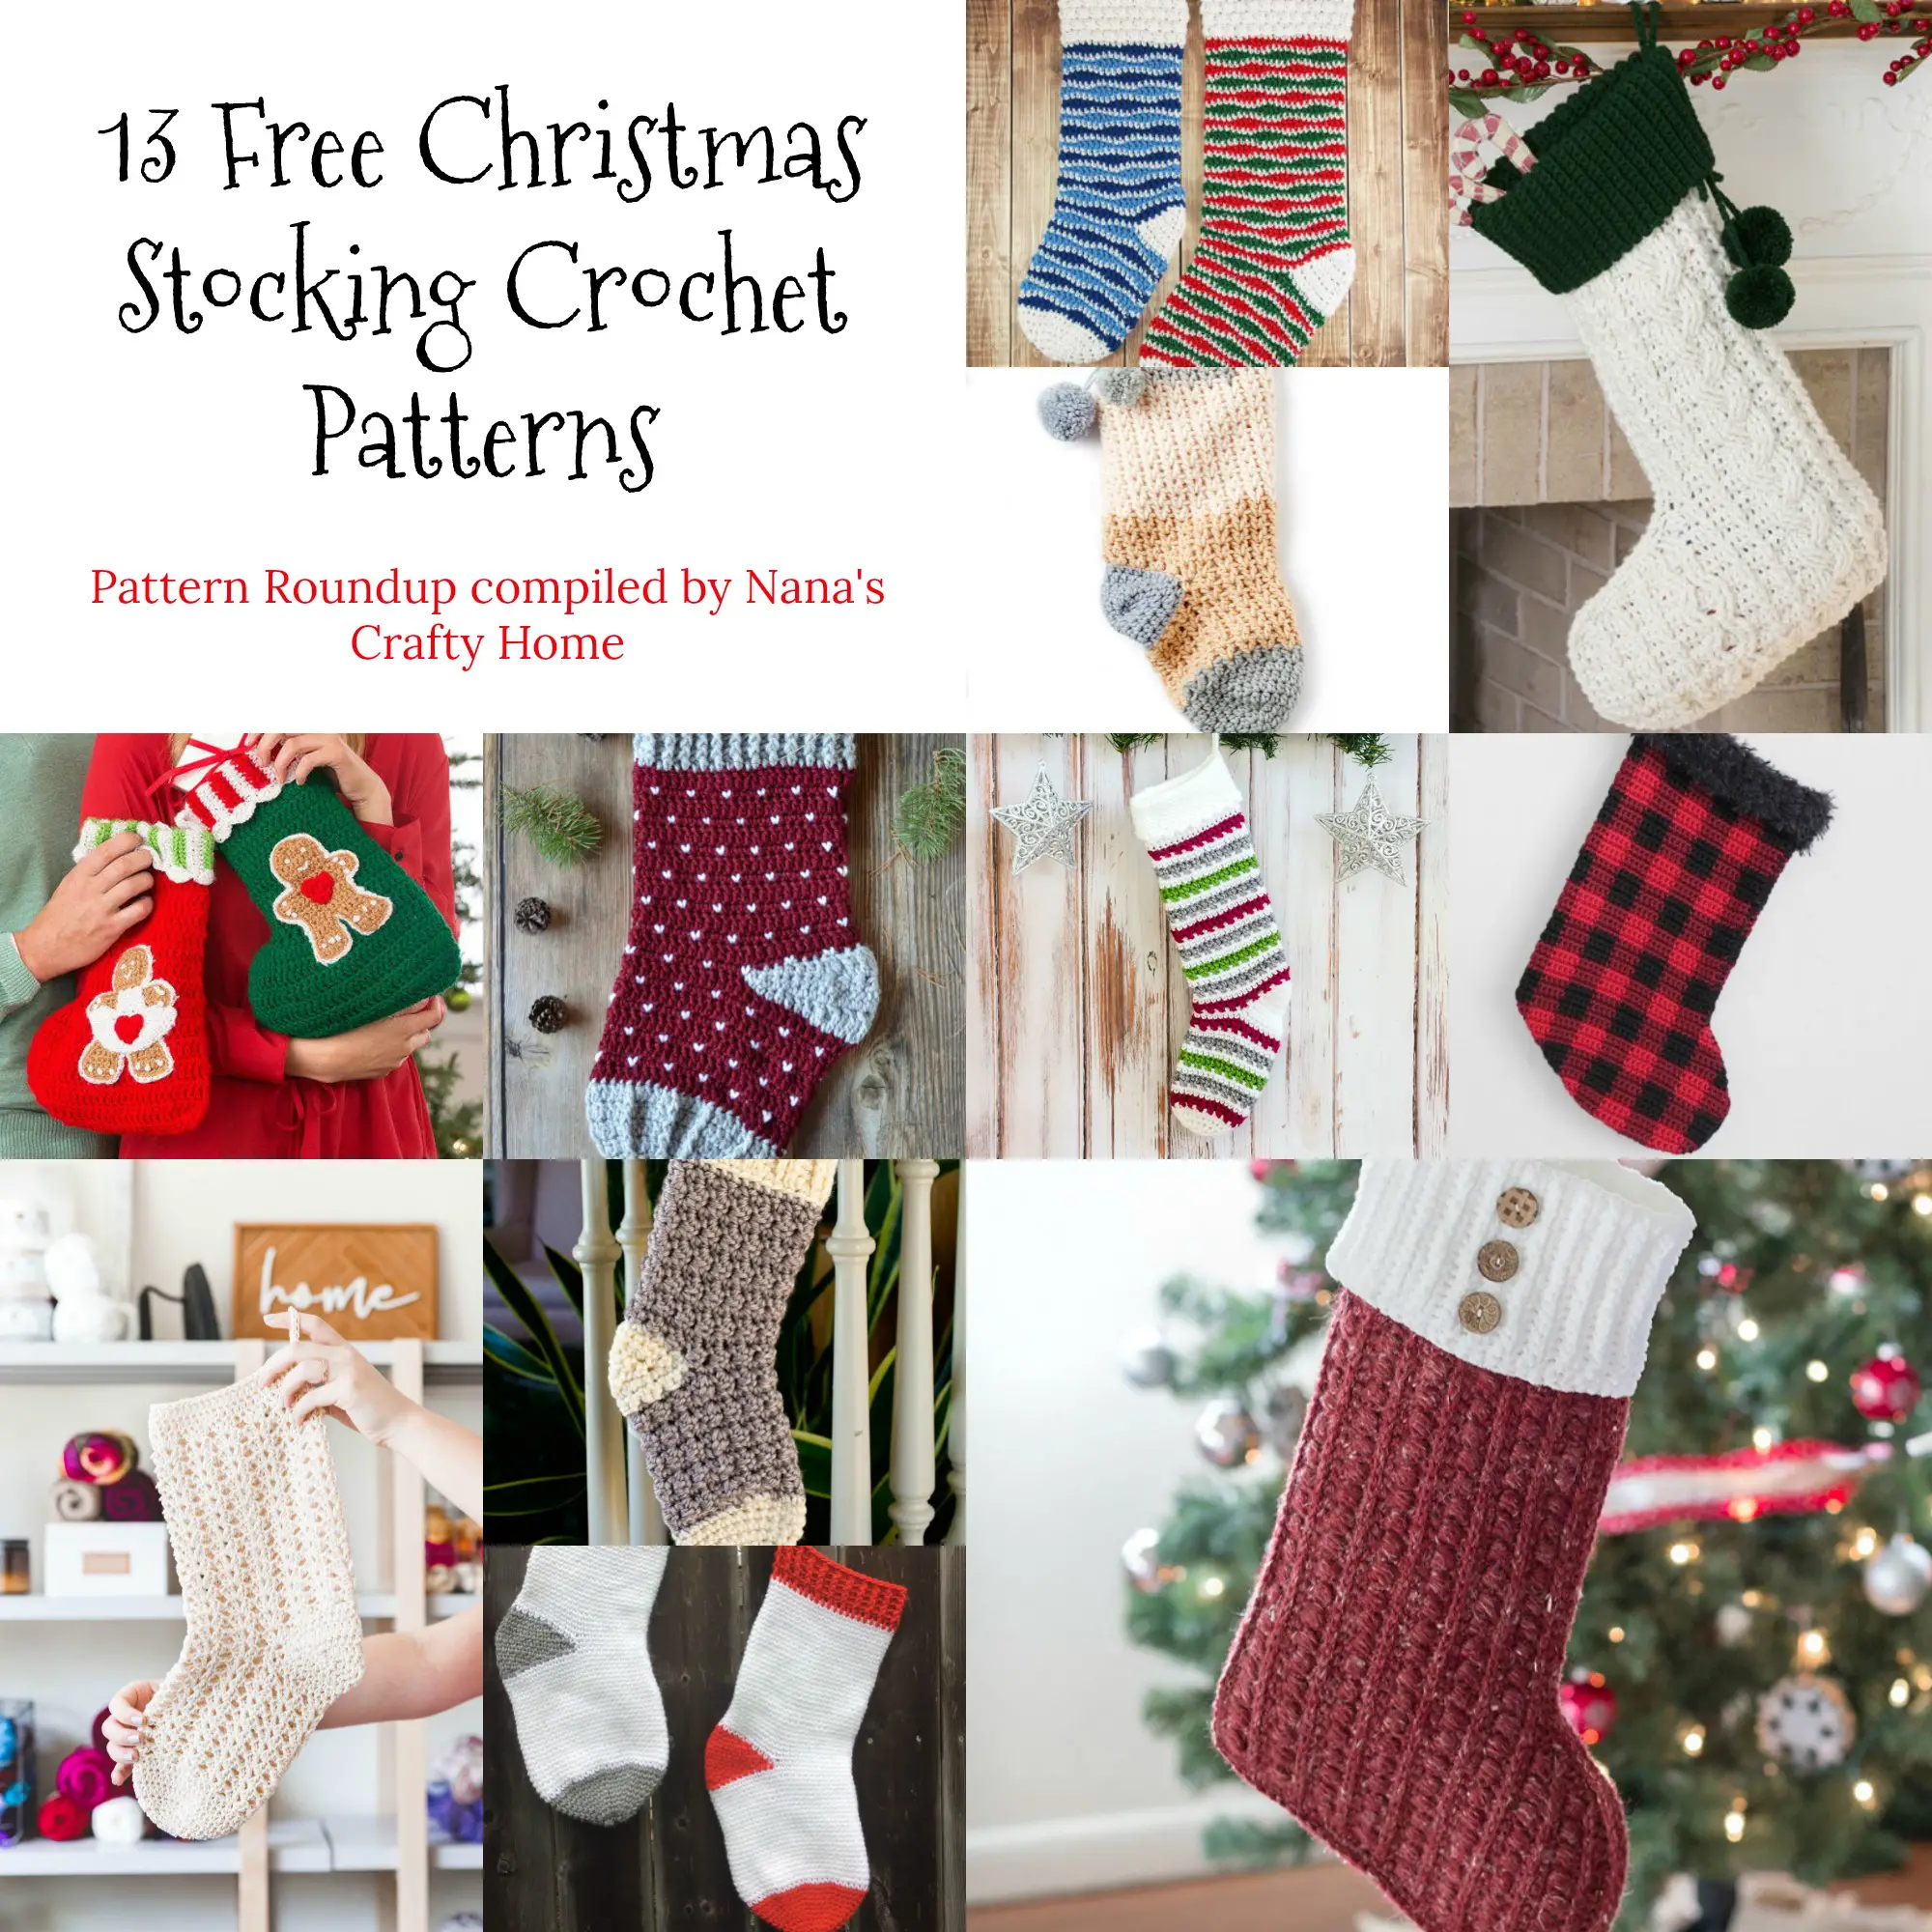 13 Free Christmas Stocking Crochet Patterns Roundup